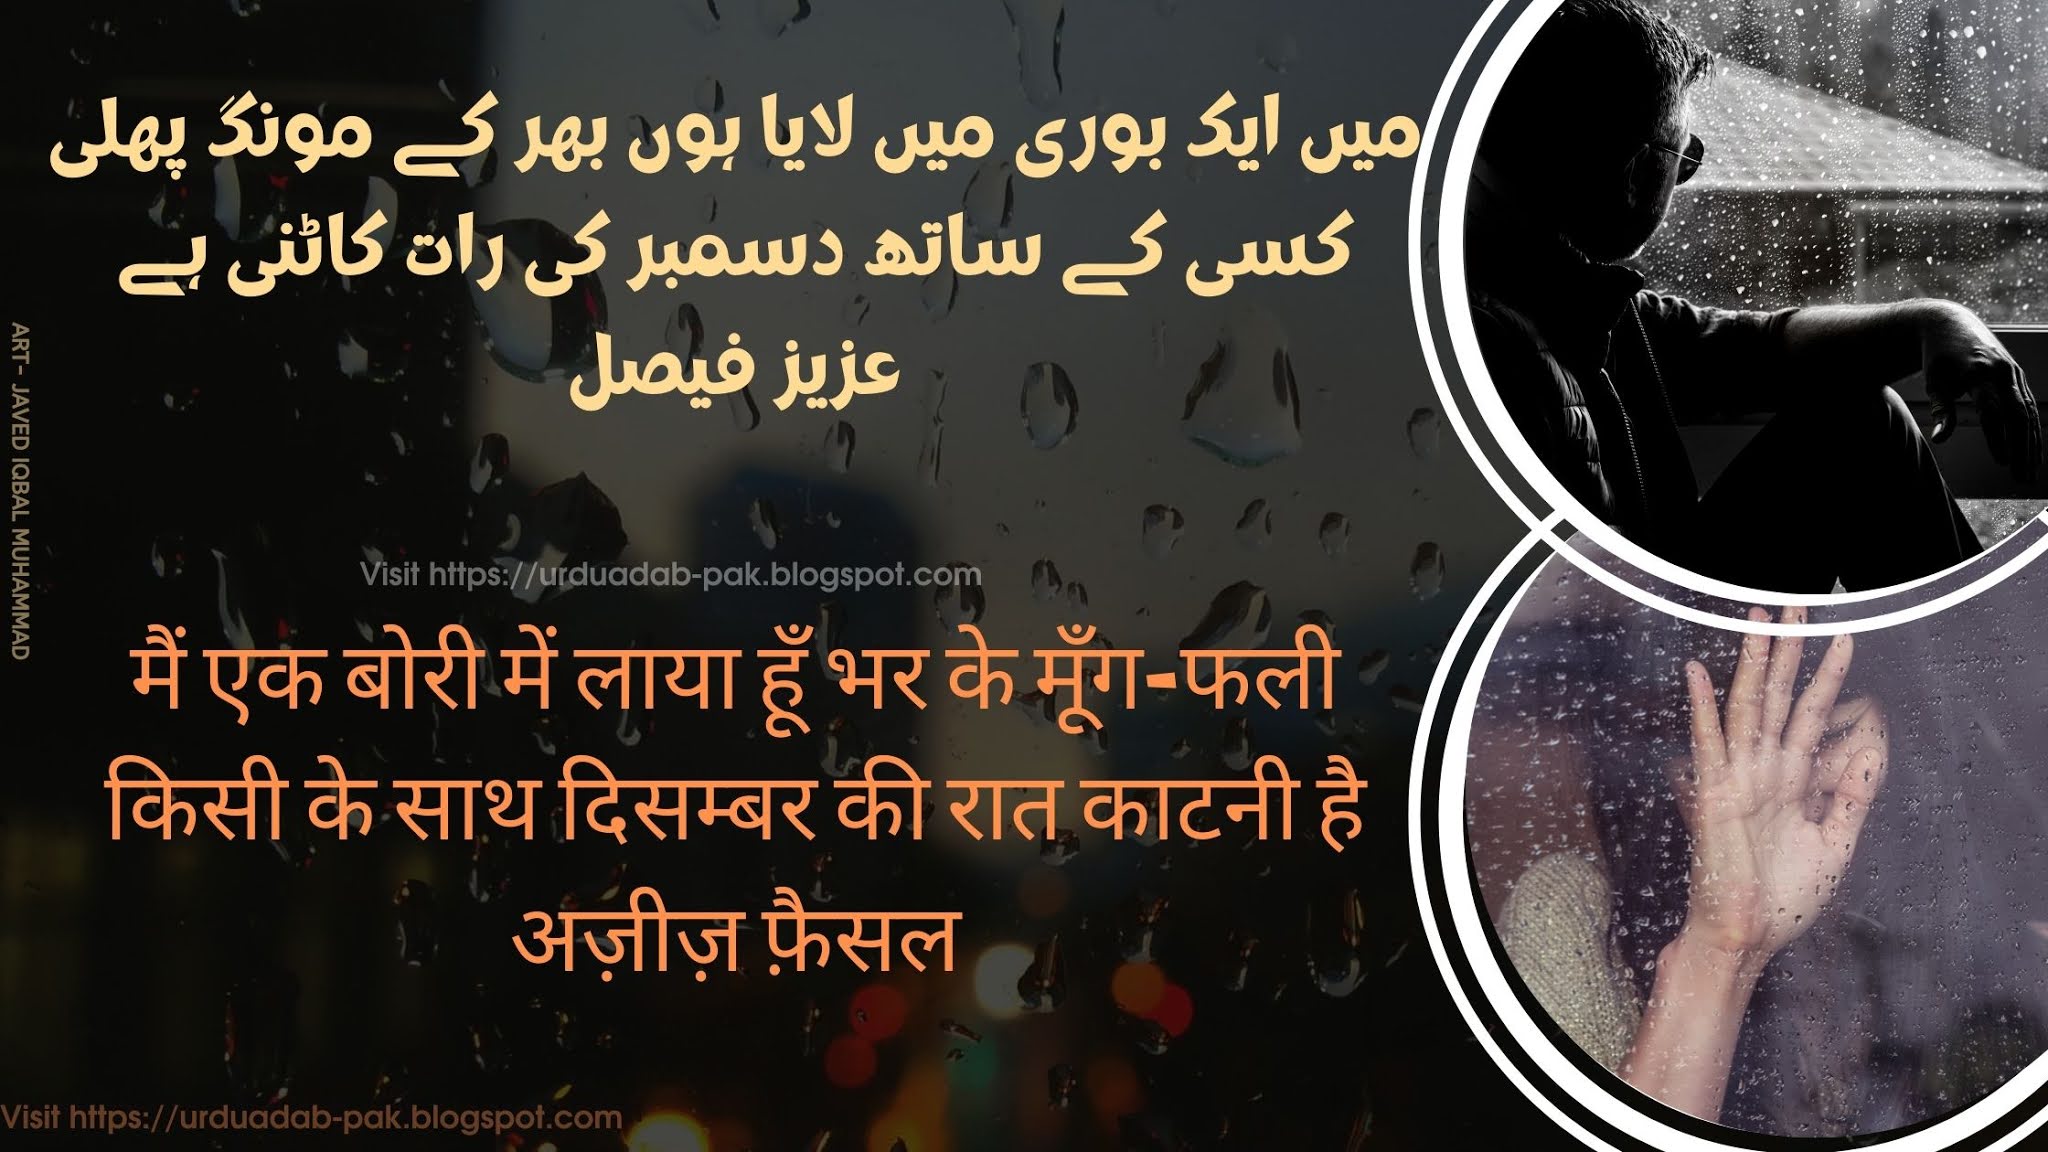 December Poetry, Sad & Love December Shayari | December poetry in Urdu Hindi Text |urdu poetry, poetry, Urdu poetry 2 lines | December Shayari  | December romantic poetry |december poetry in Urdu 2 lines | December love poetry in Urdu |December